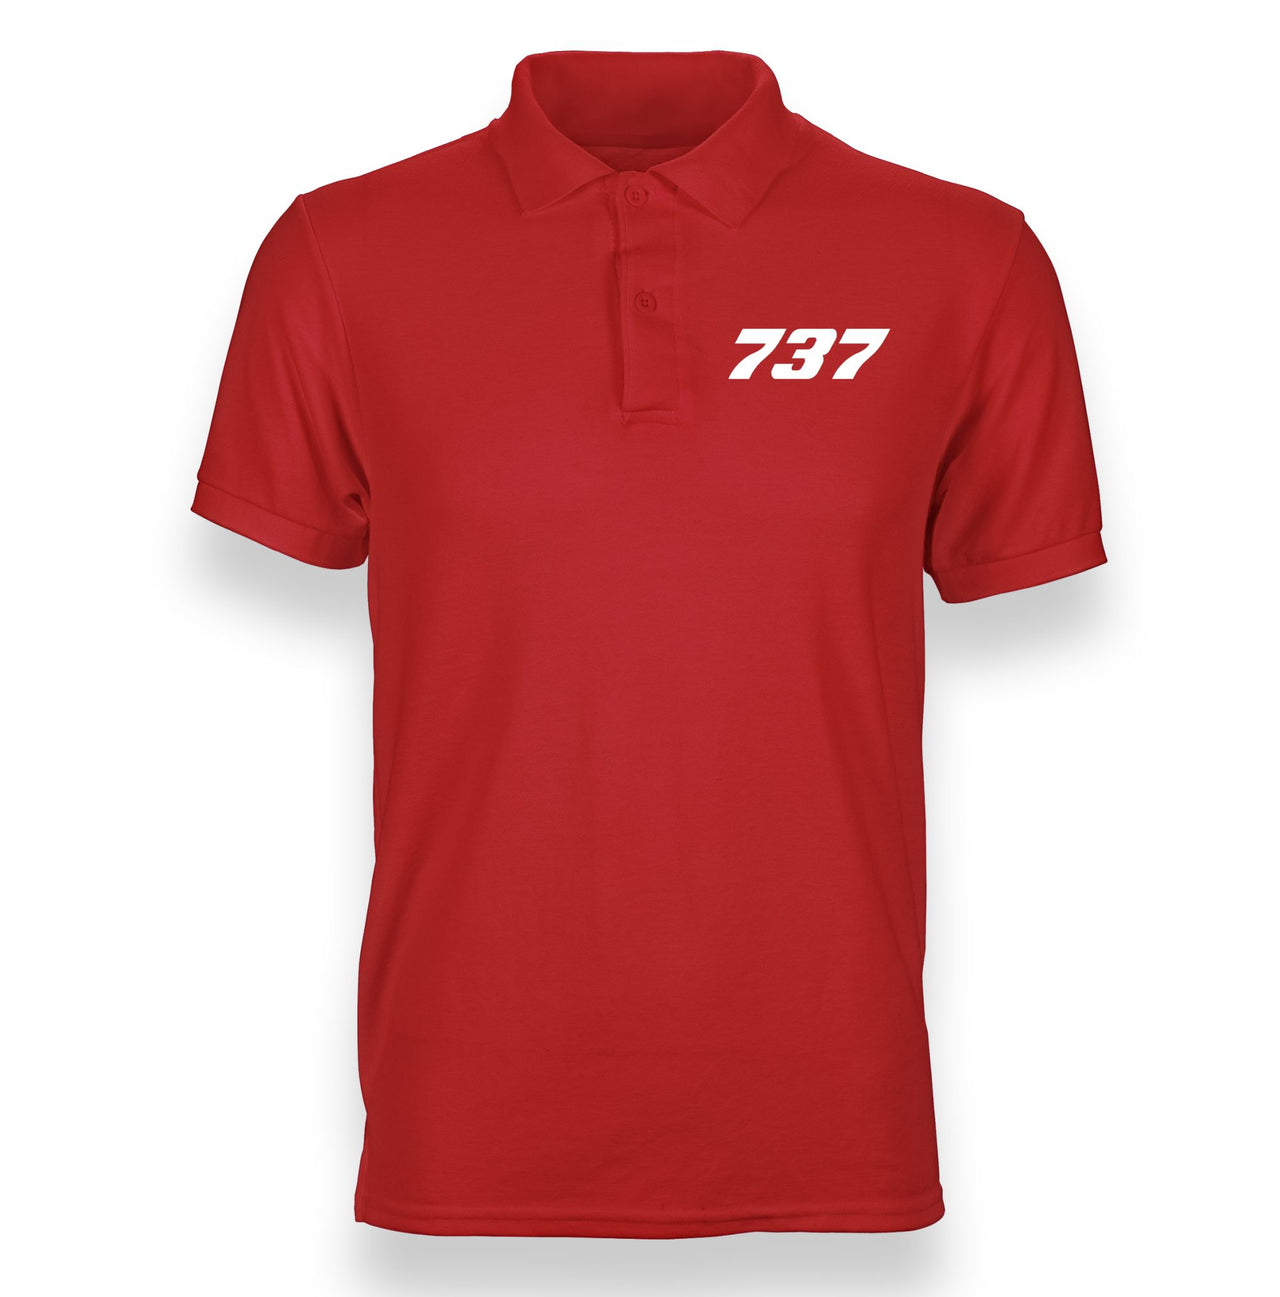 737 Flat Text Designed "WOMEN" Polo T-Shirts